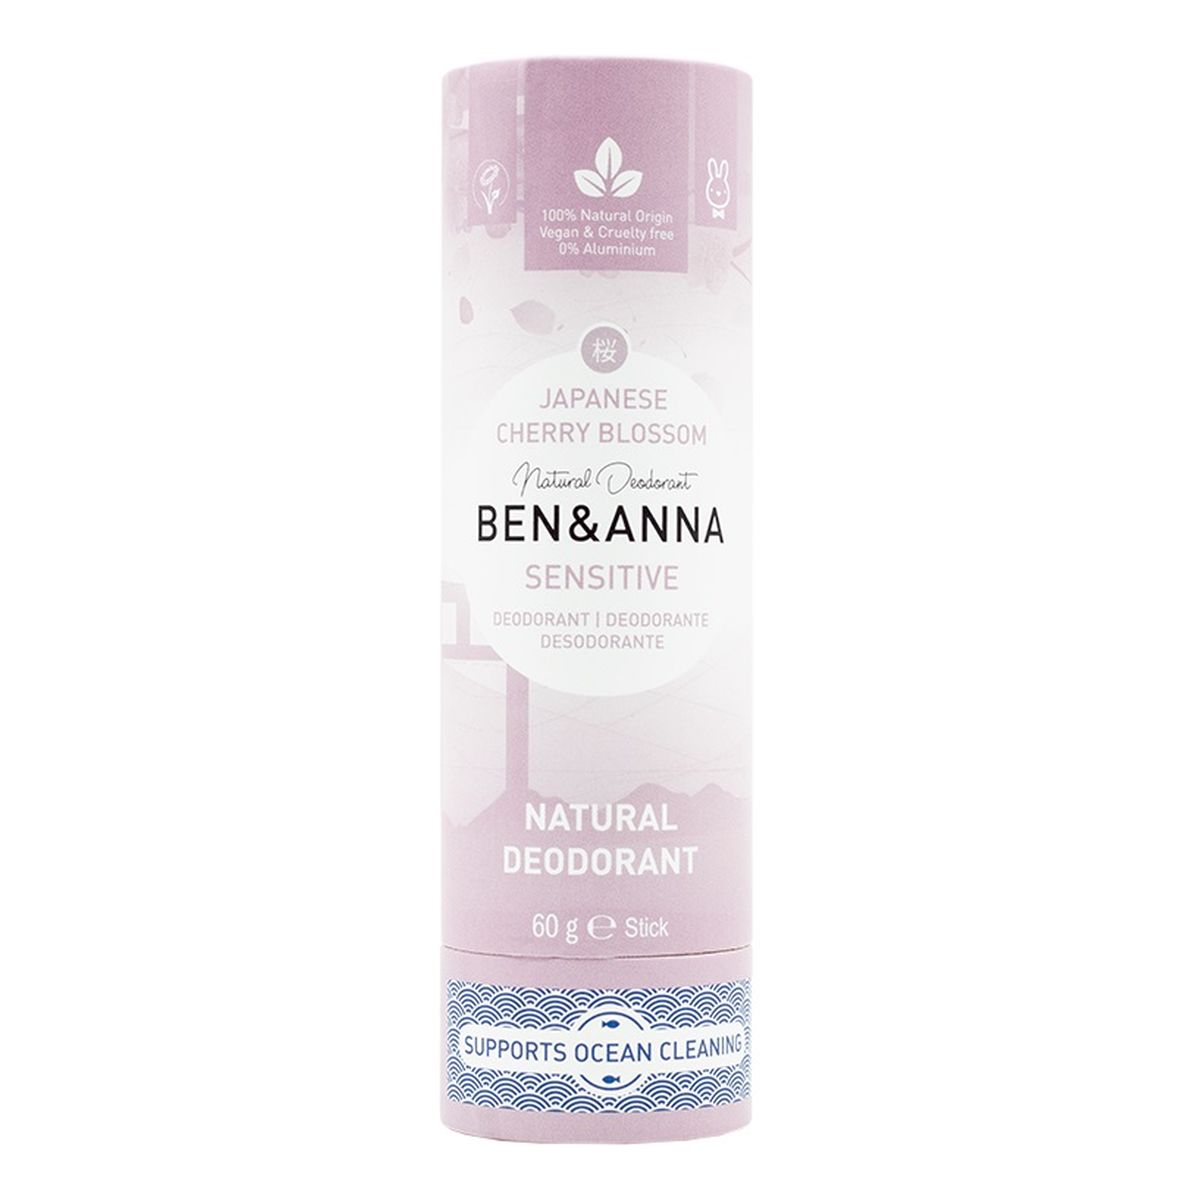 Ben&Anna Sensitive Natural Deodorant naturalny dezodorant do skóry wrażliwej Japanese Cherry Blossom 60g